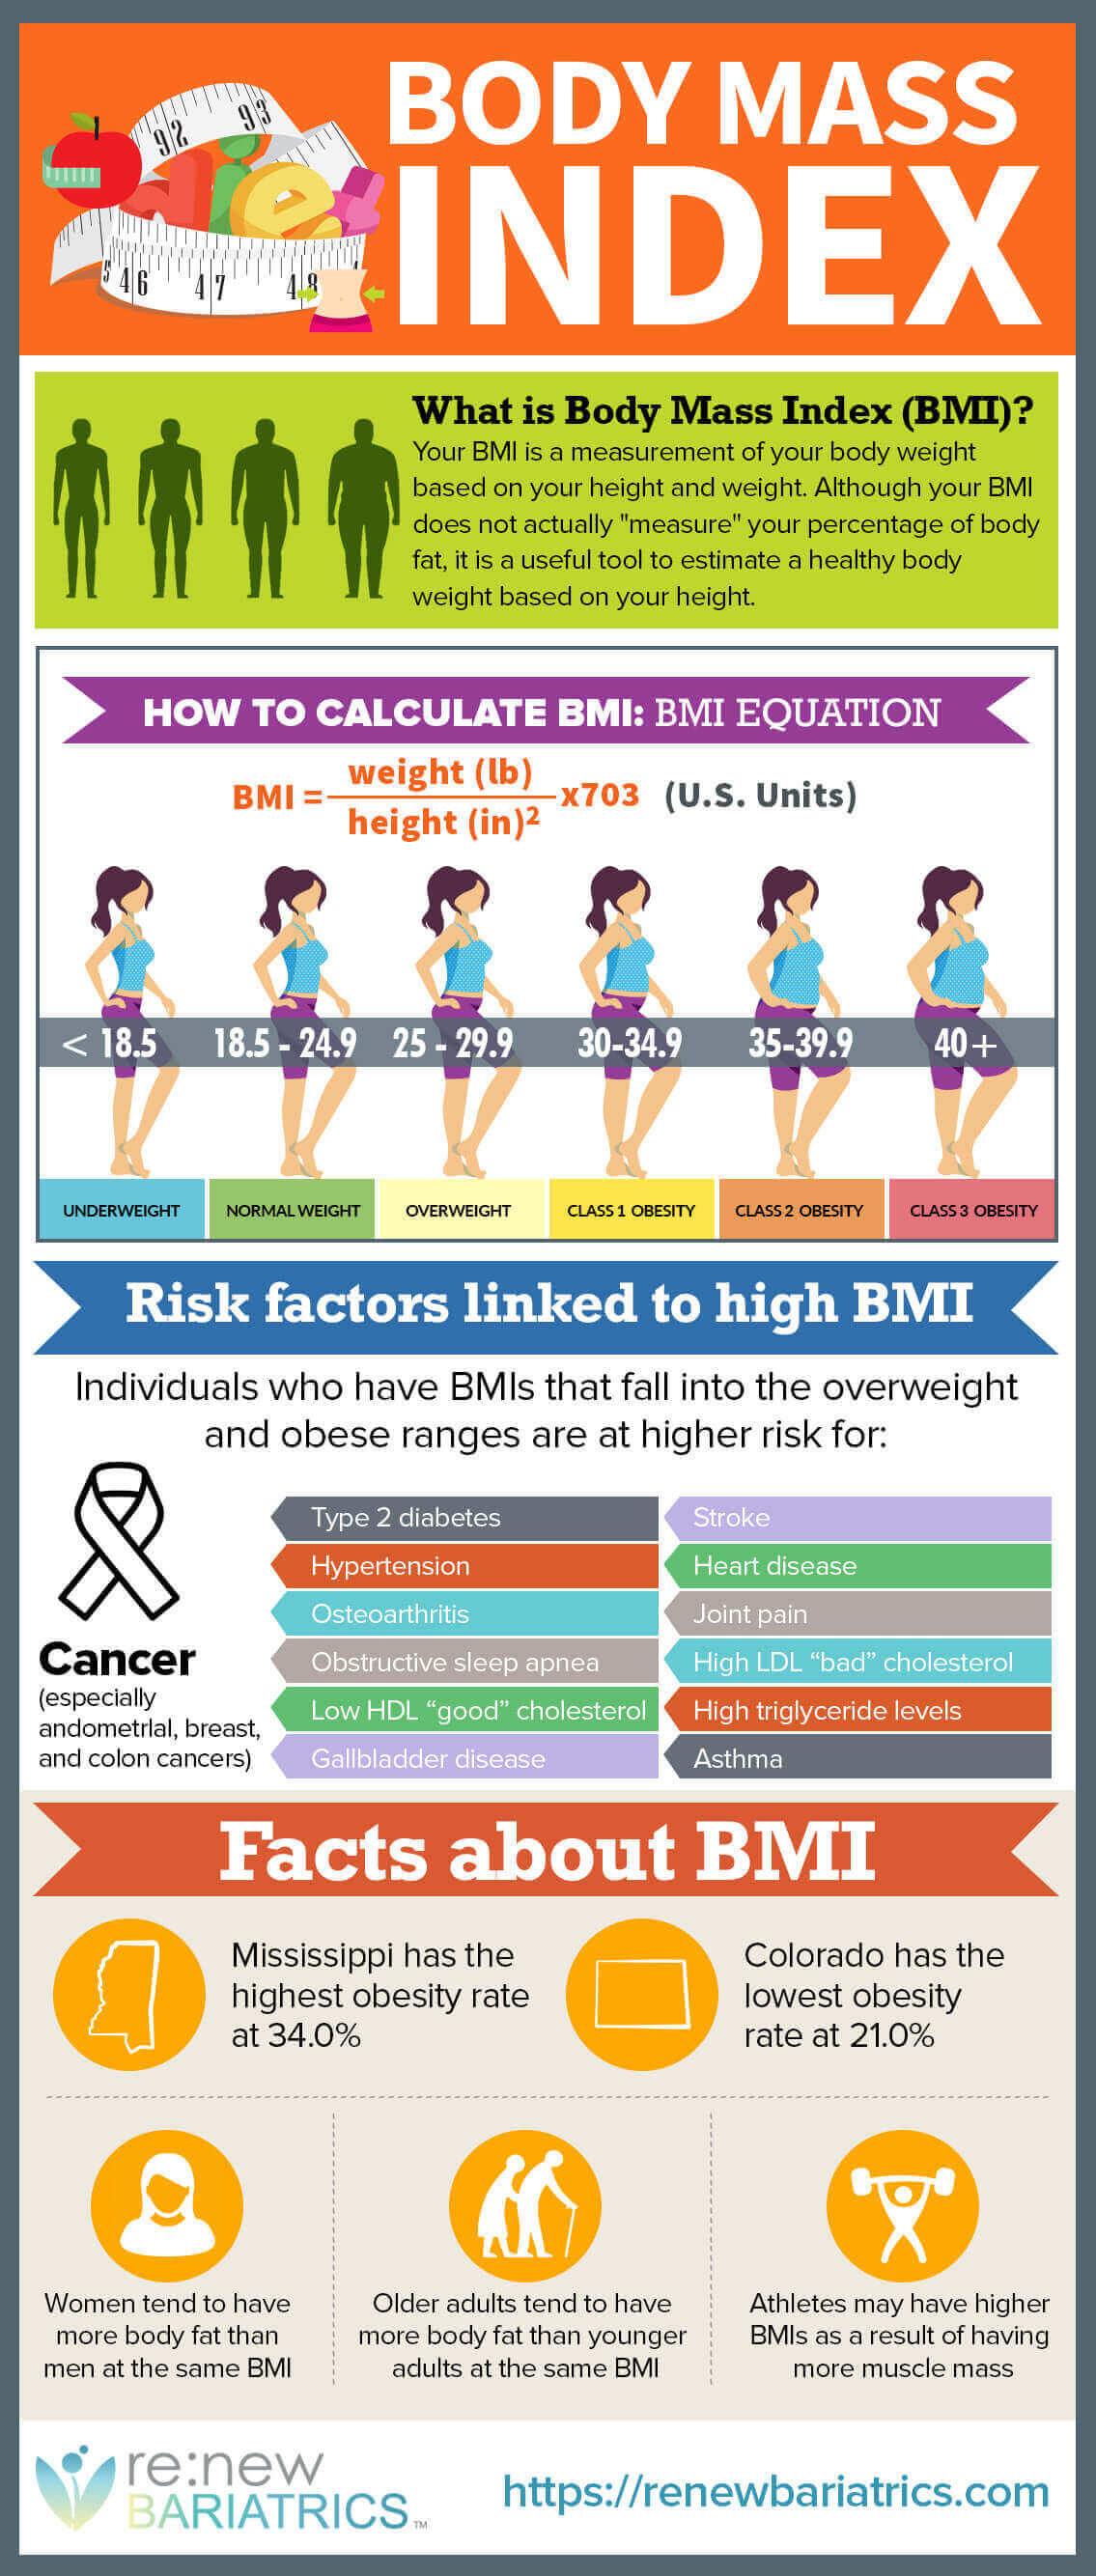 Body Mass Index or BMI